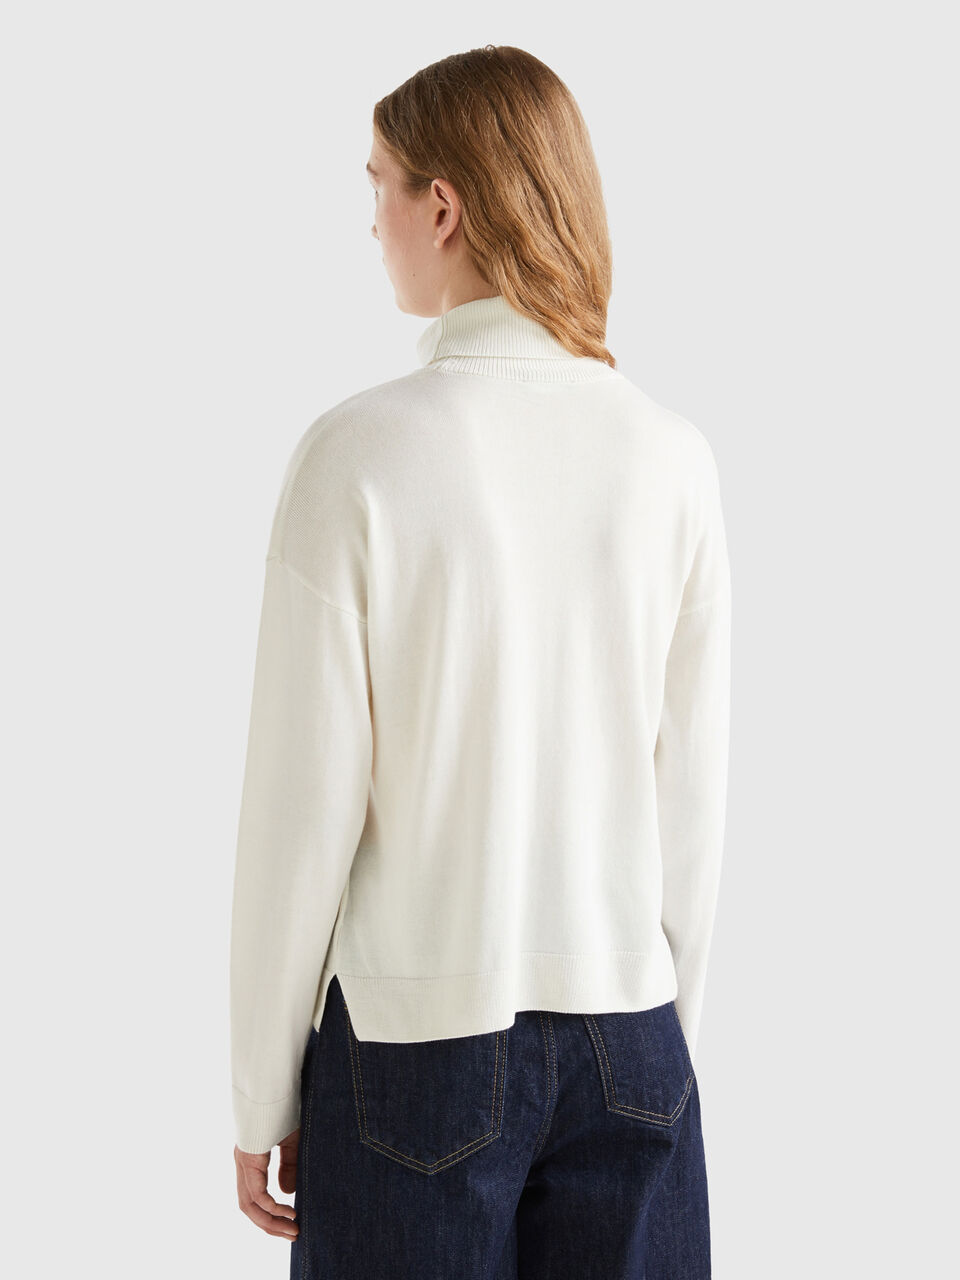 Women's turtleneck sweater  White modal cashmere turtleneck